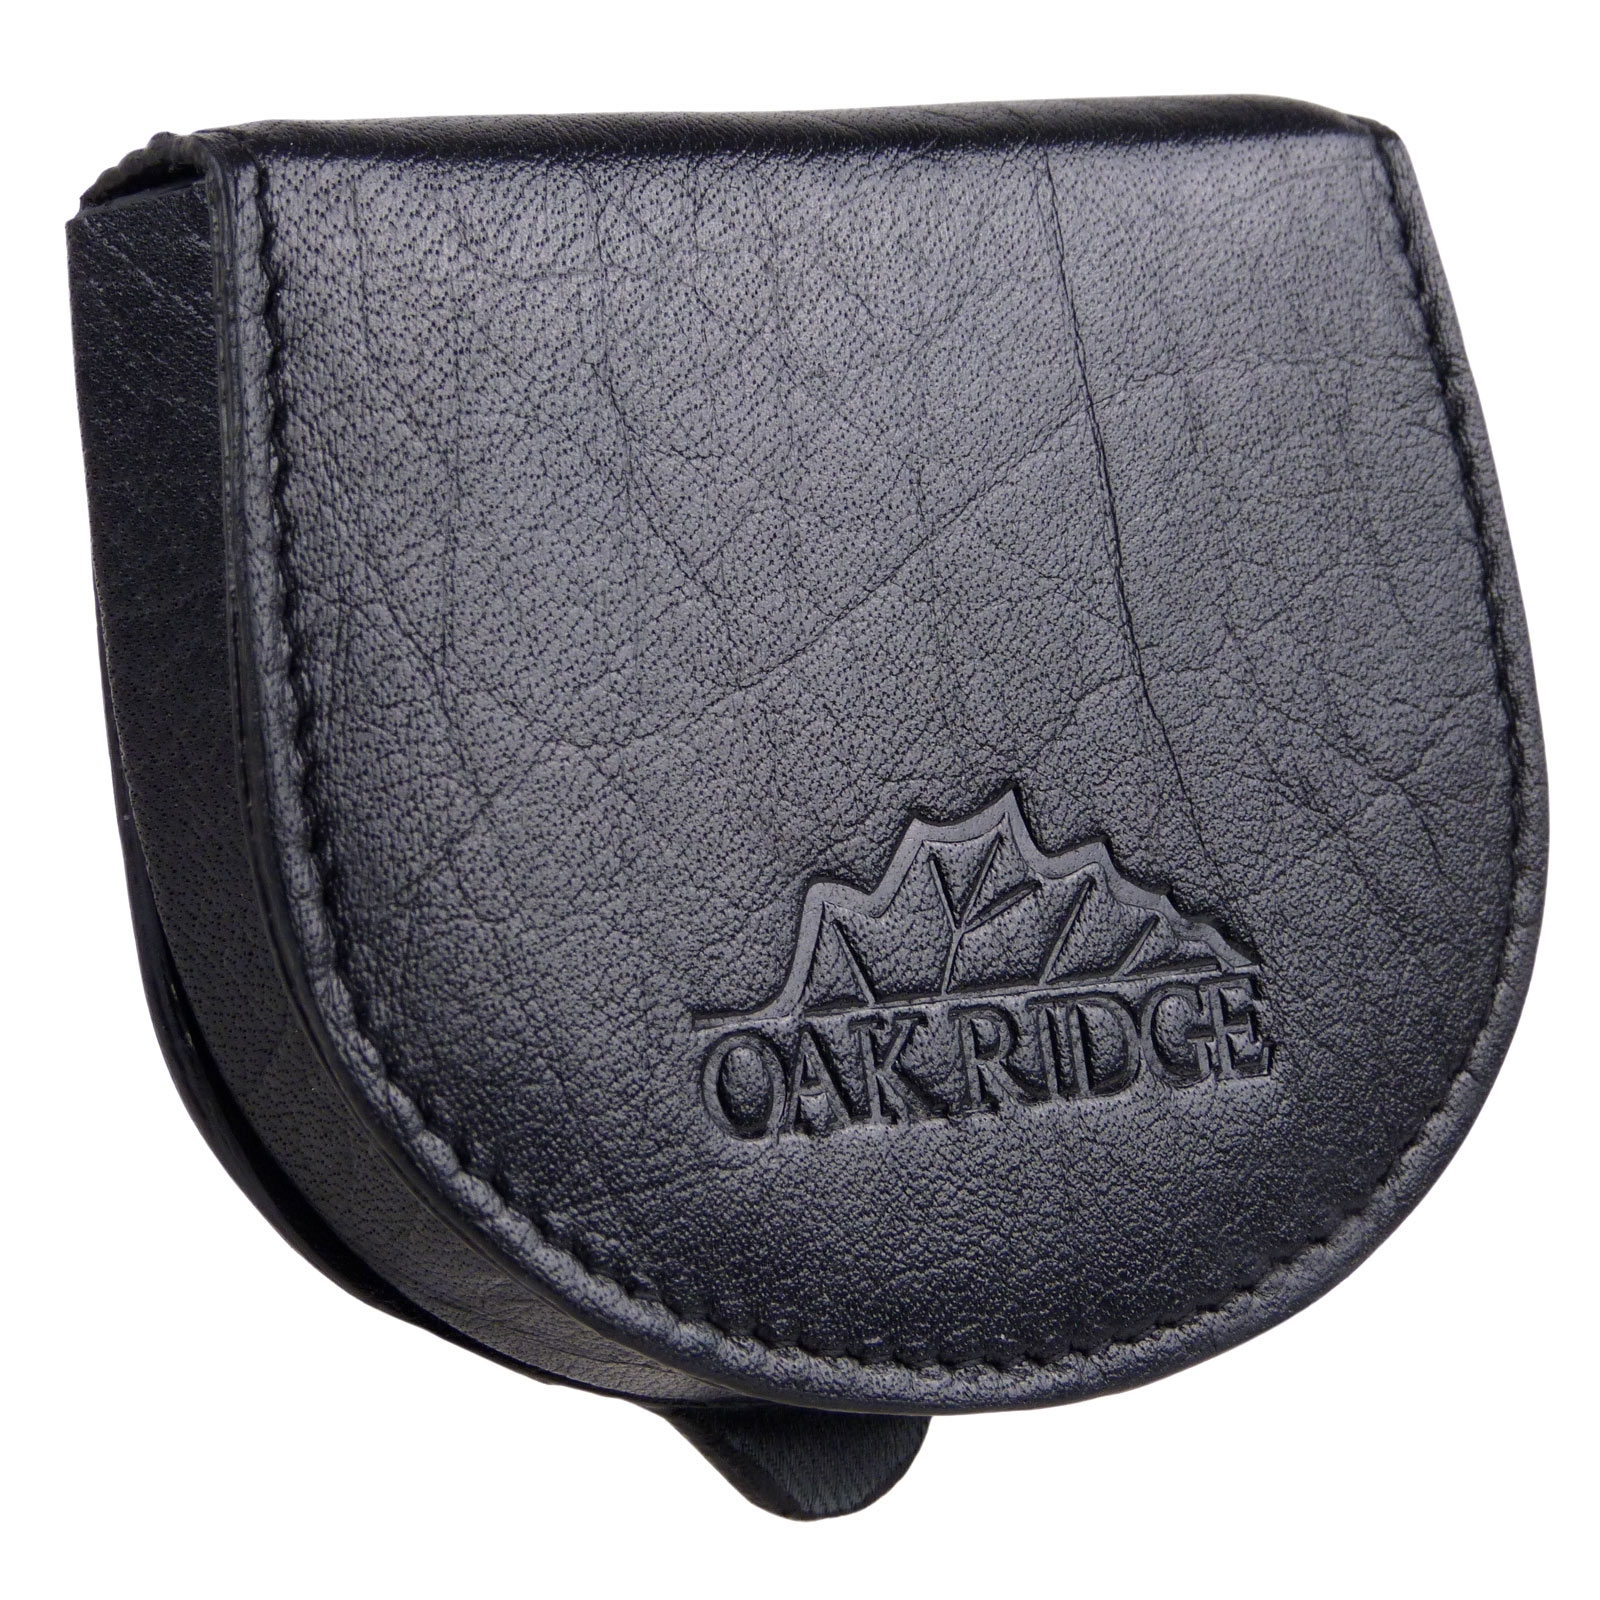 Nero Cintura in Pelle 3 ZIP bagpurse Coin POUCH da Oakridge Handy Man 